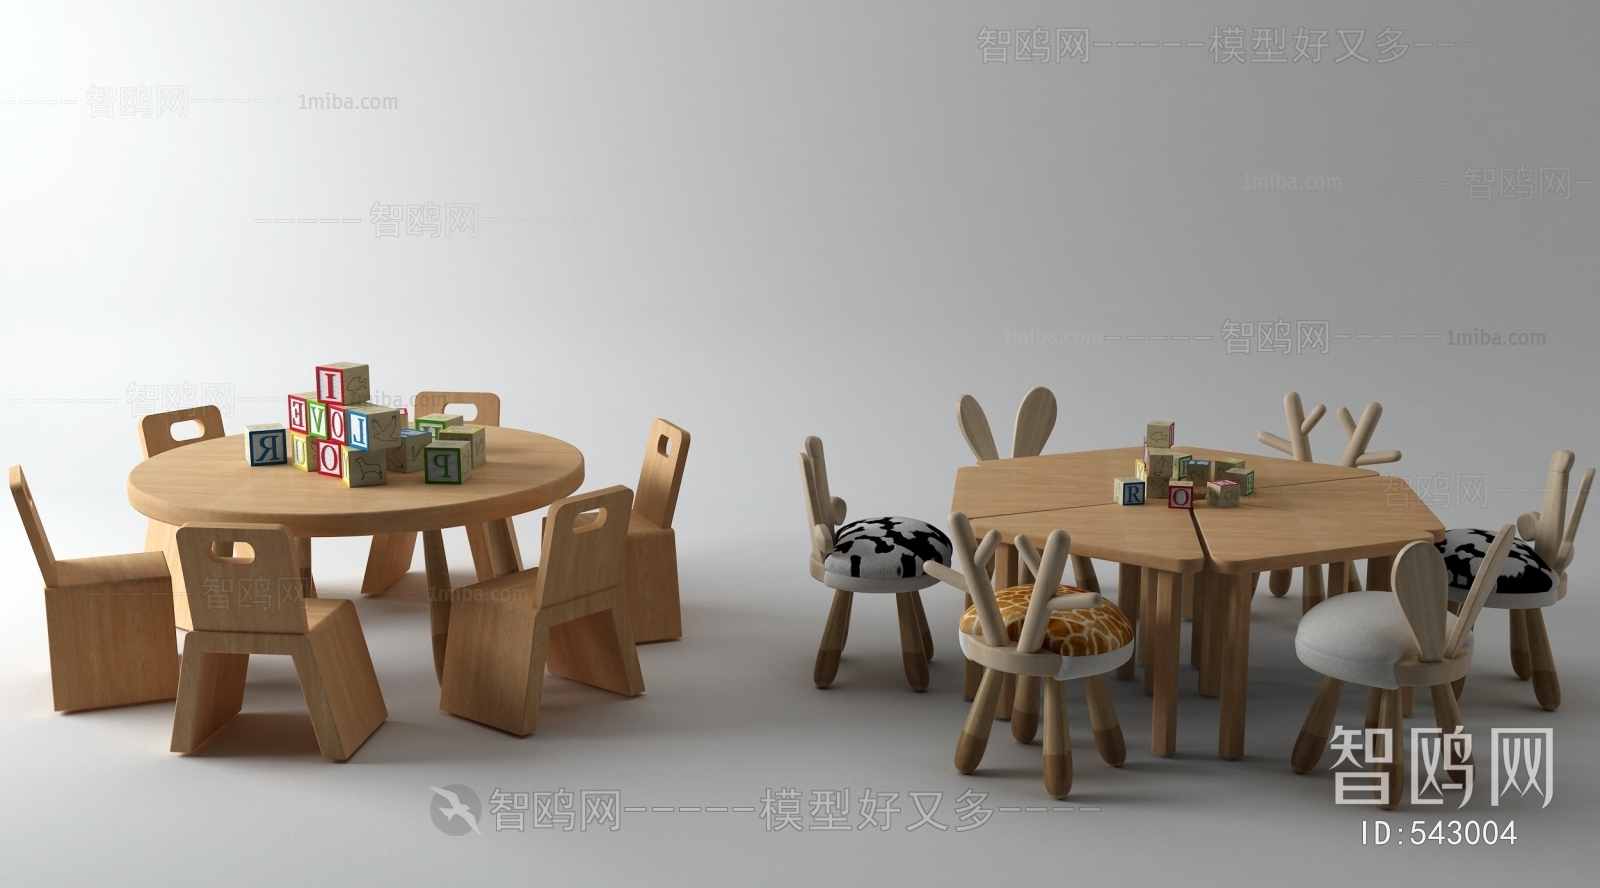 Modern Children's Table/chair